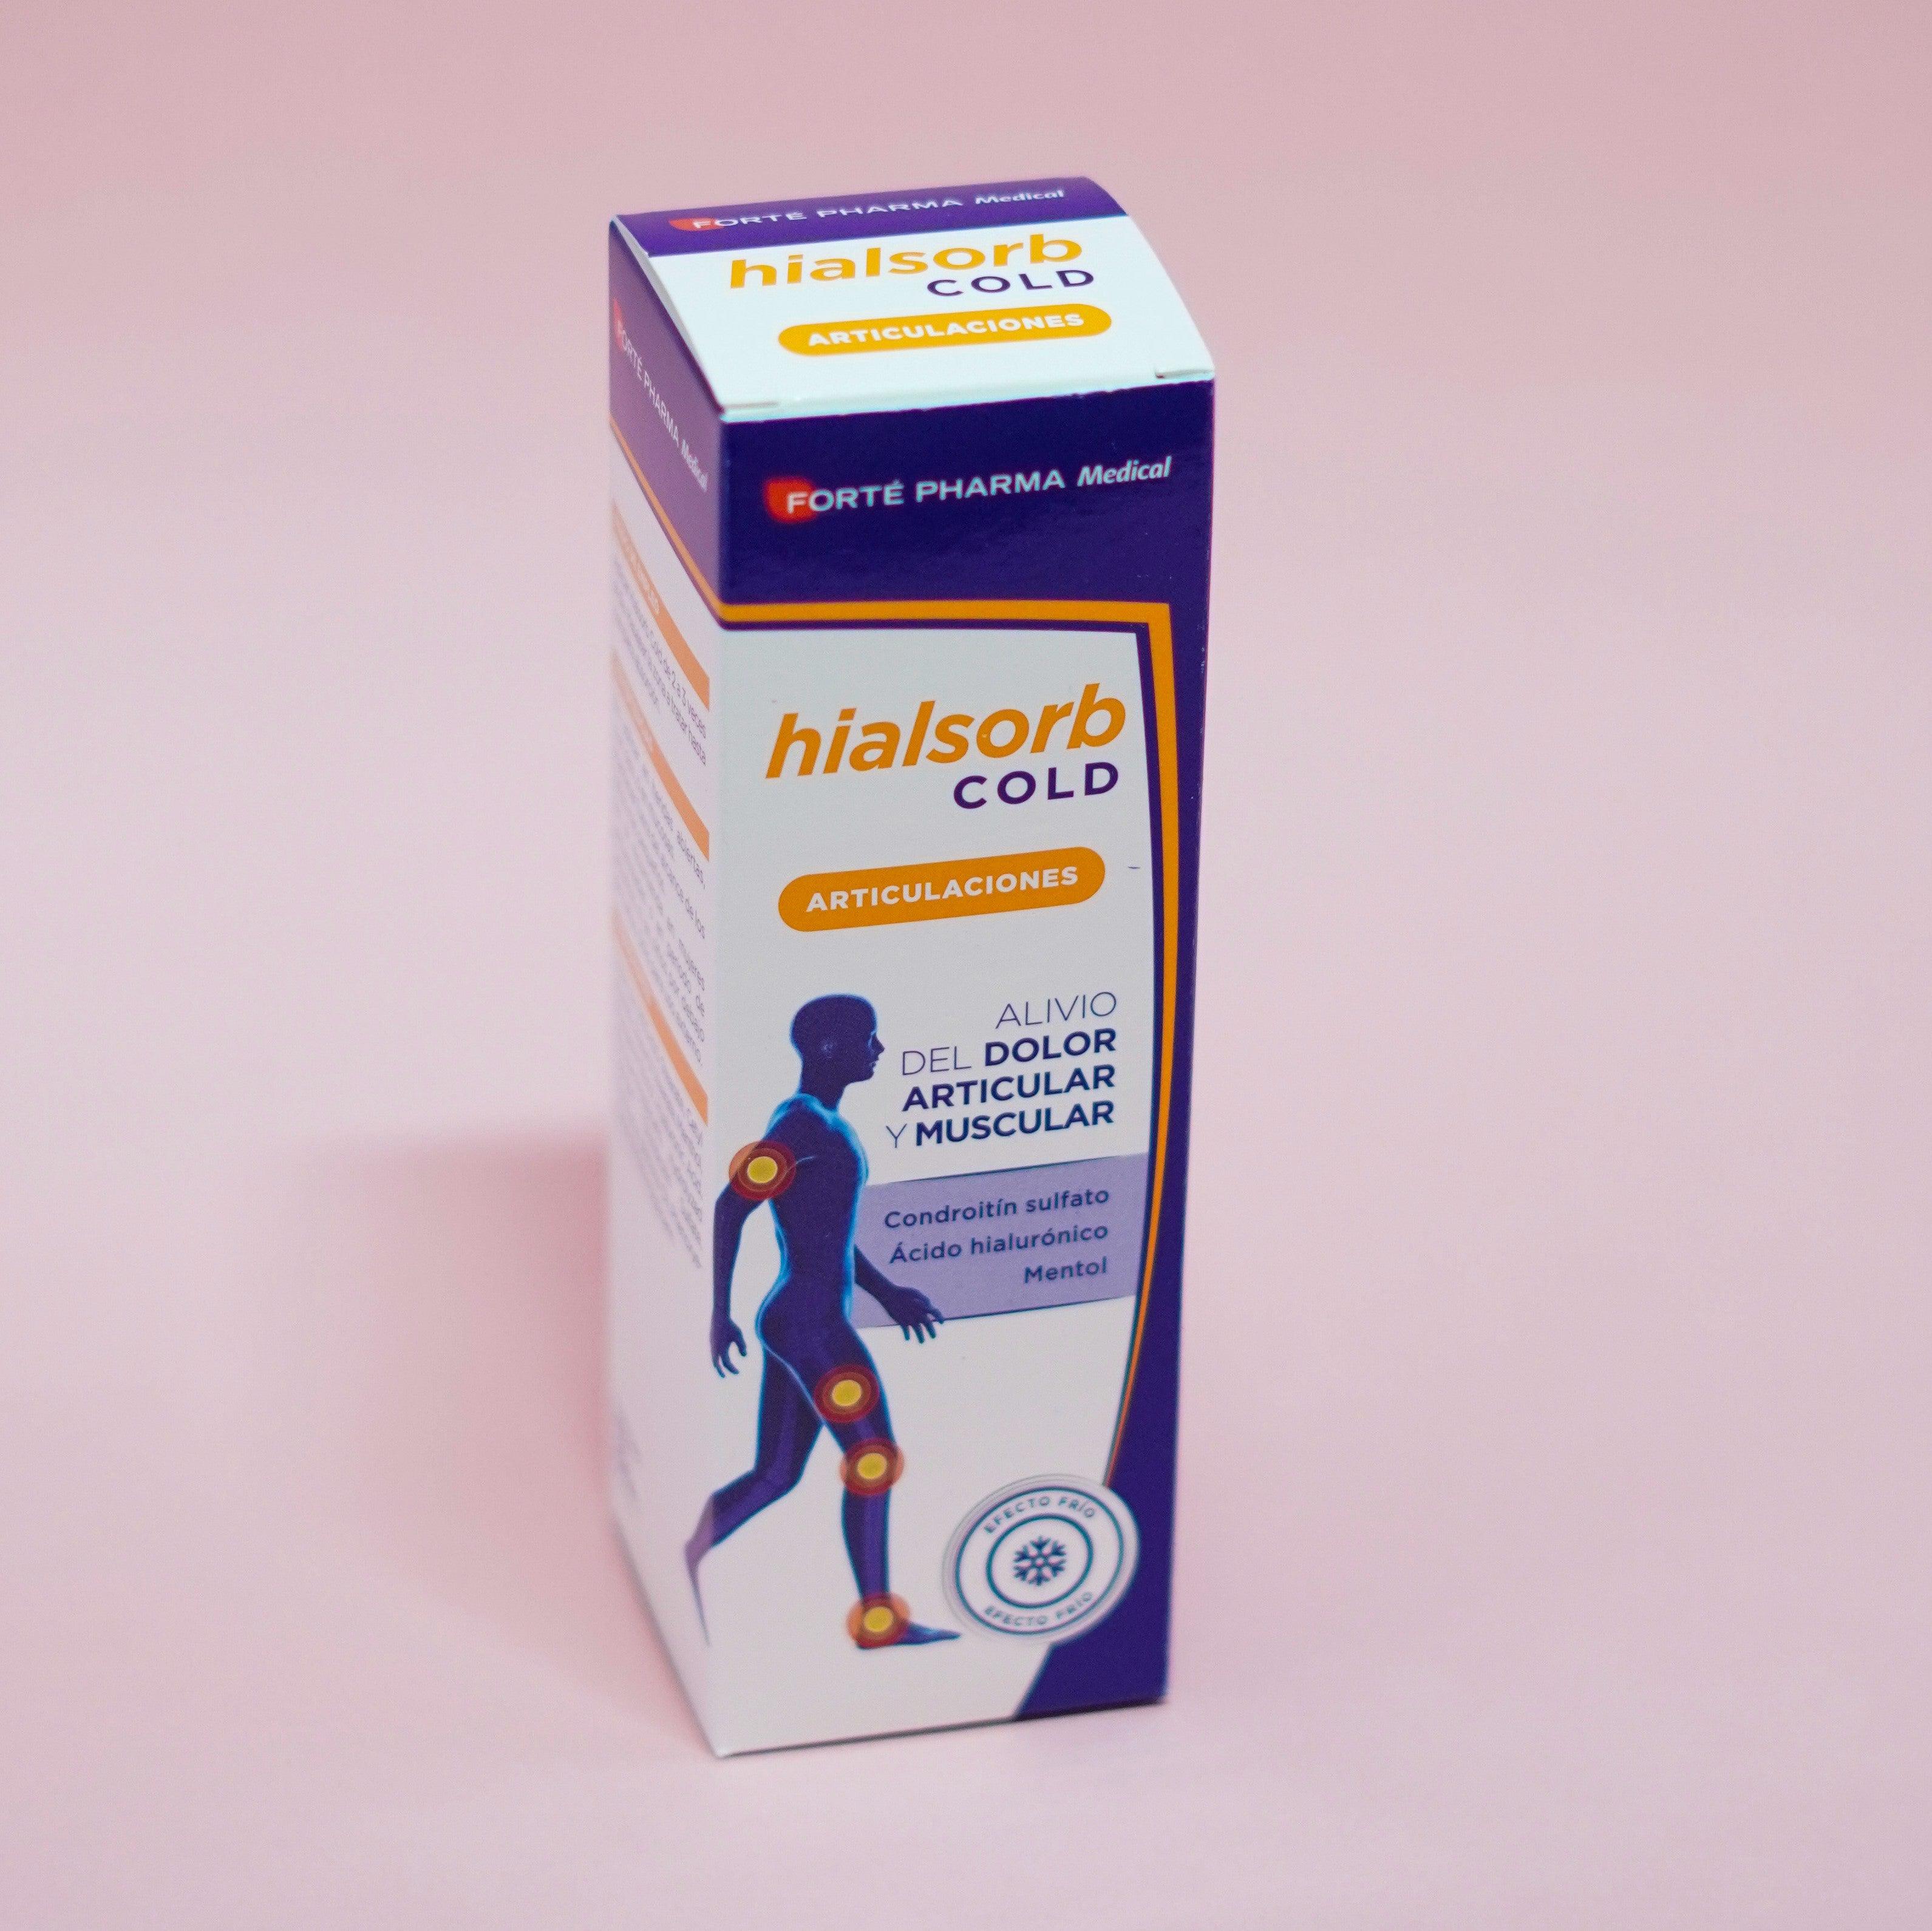 hialsorb cold-Forté Pharma